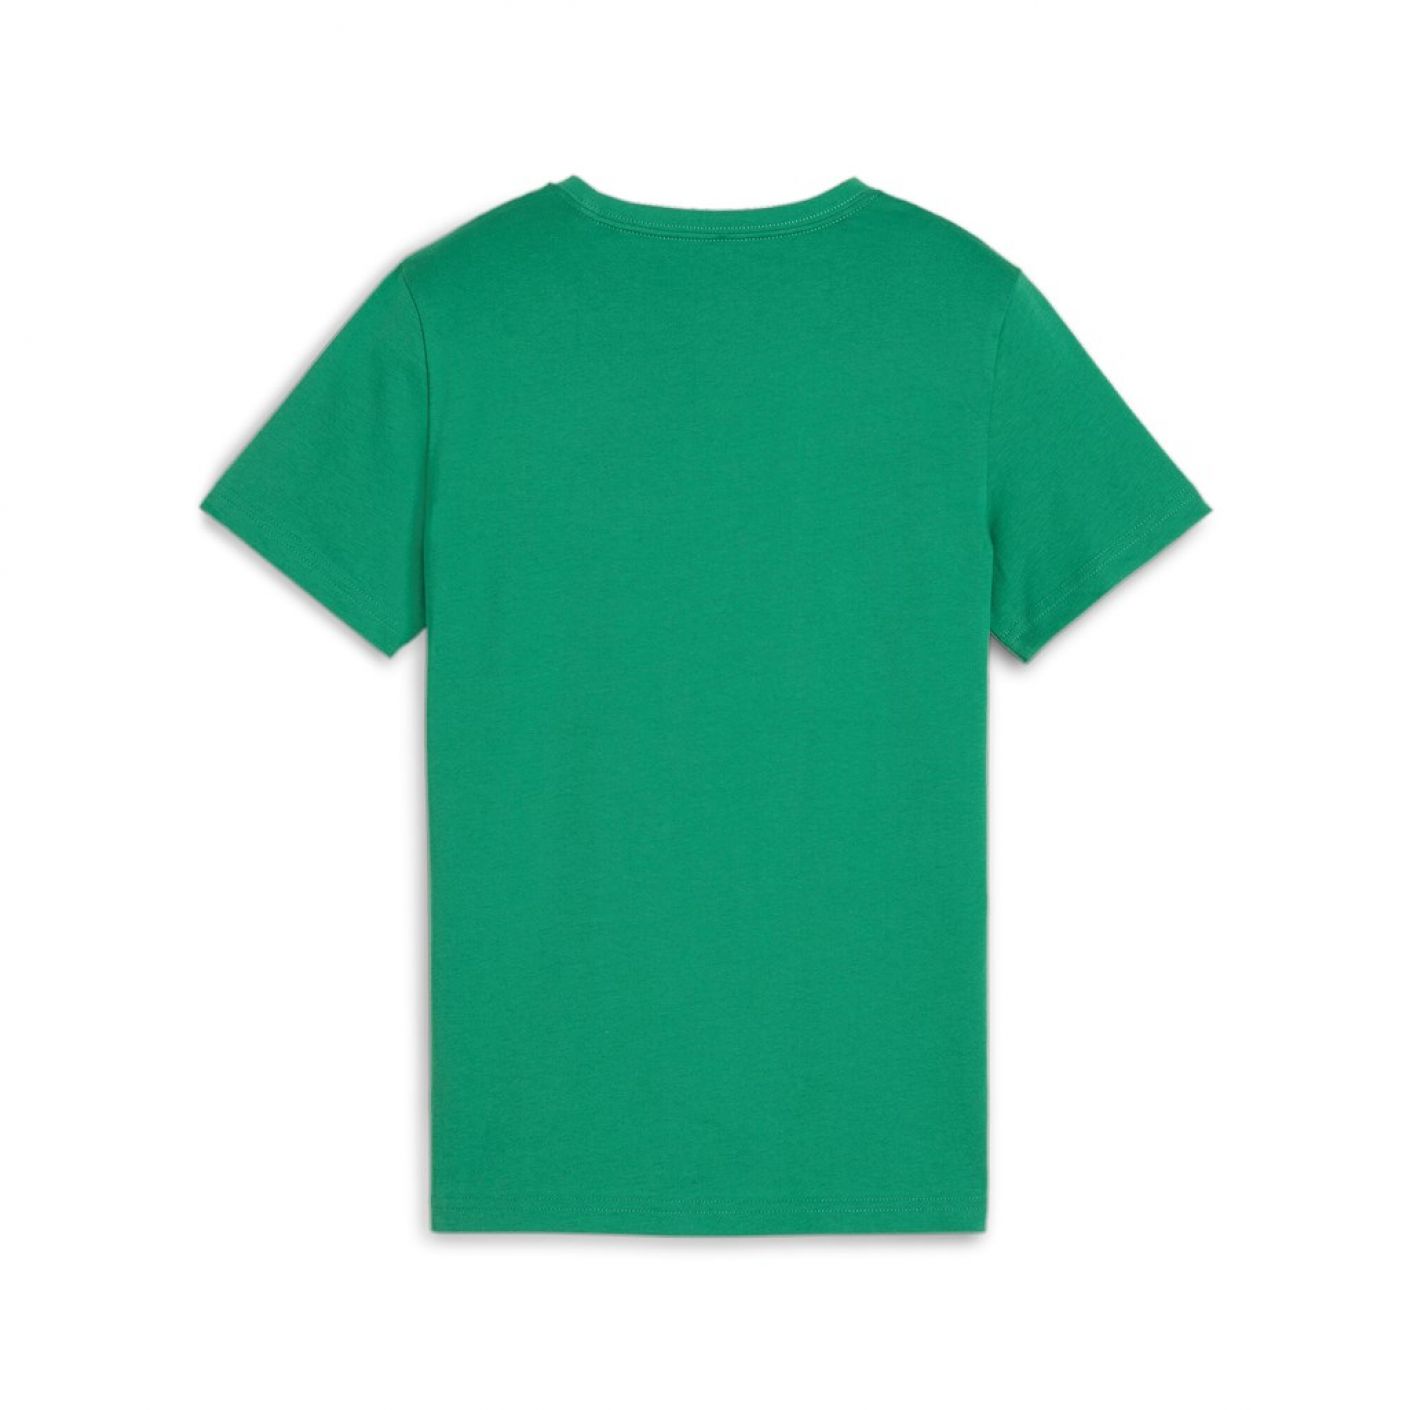 PumaT-Shirt Essentials+ Two-One Logo Archive Green da Bambino